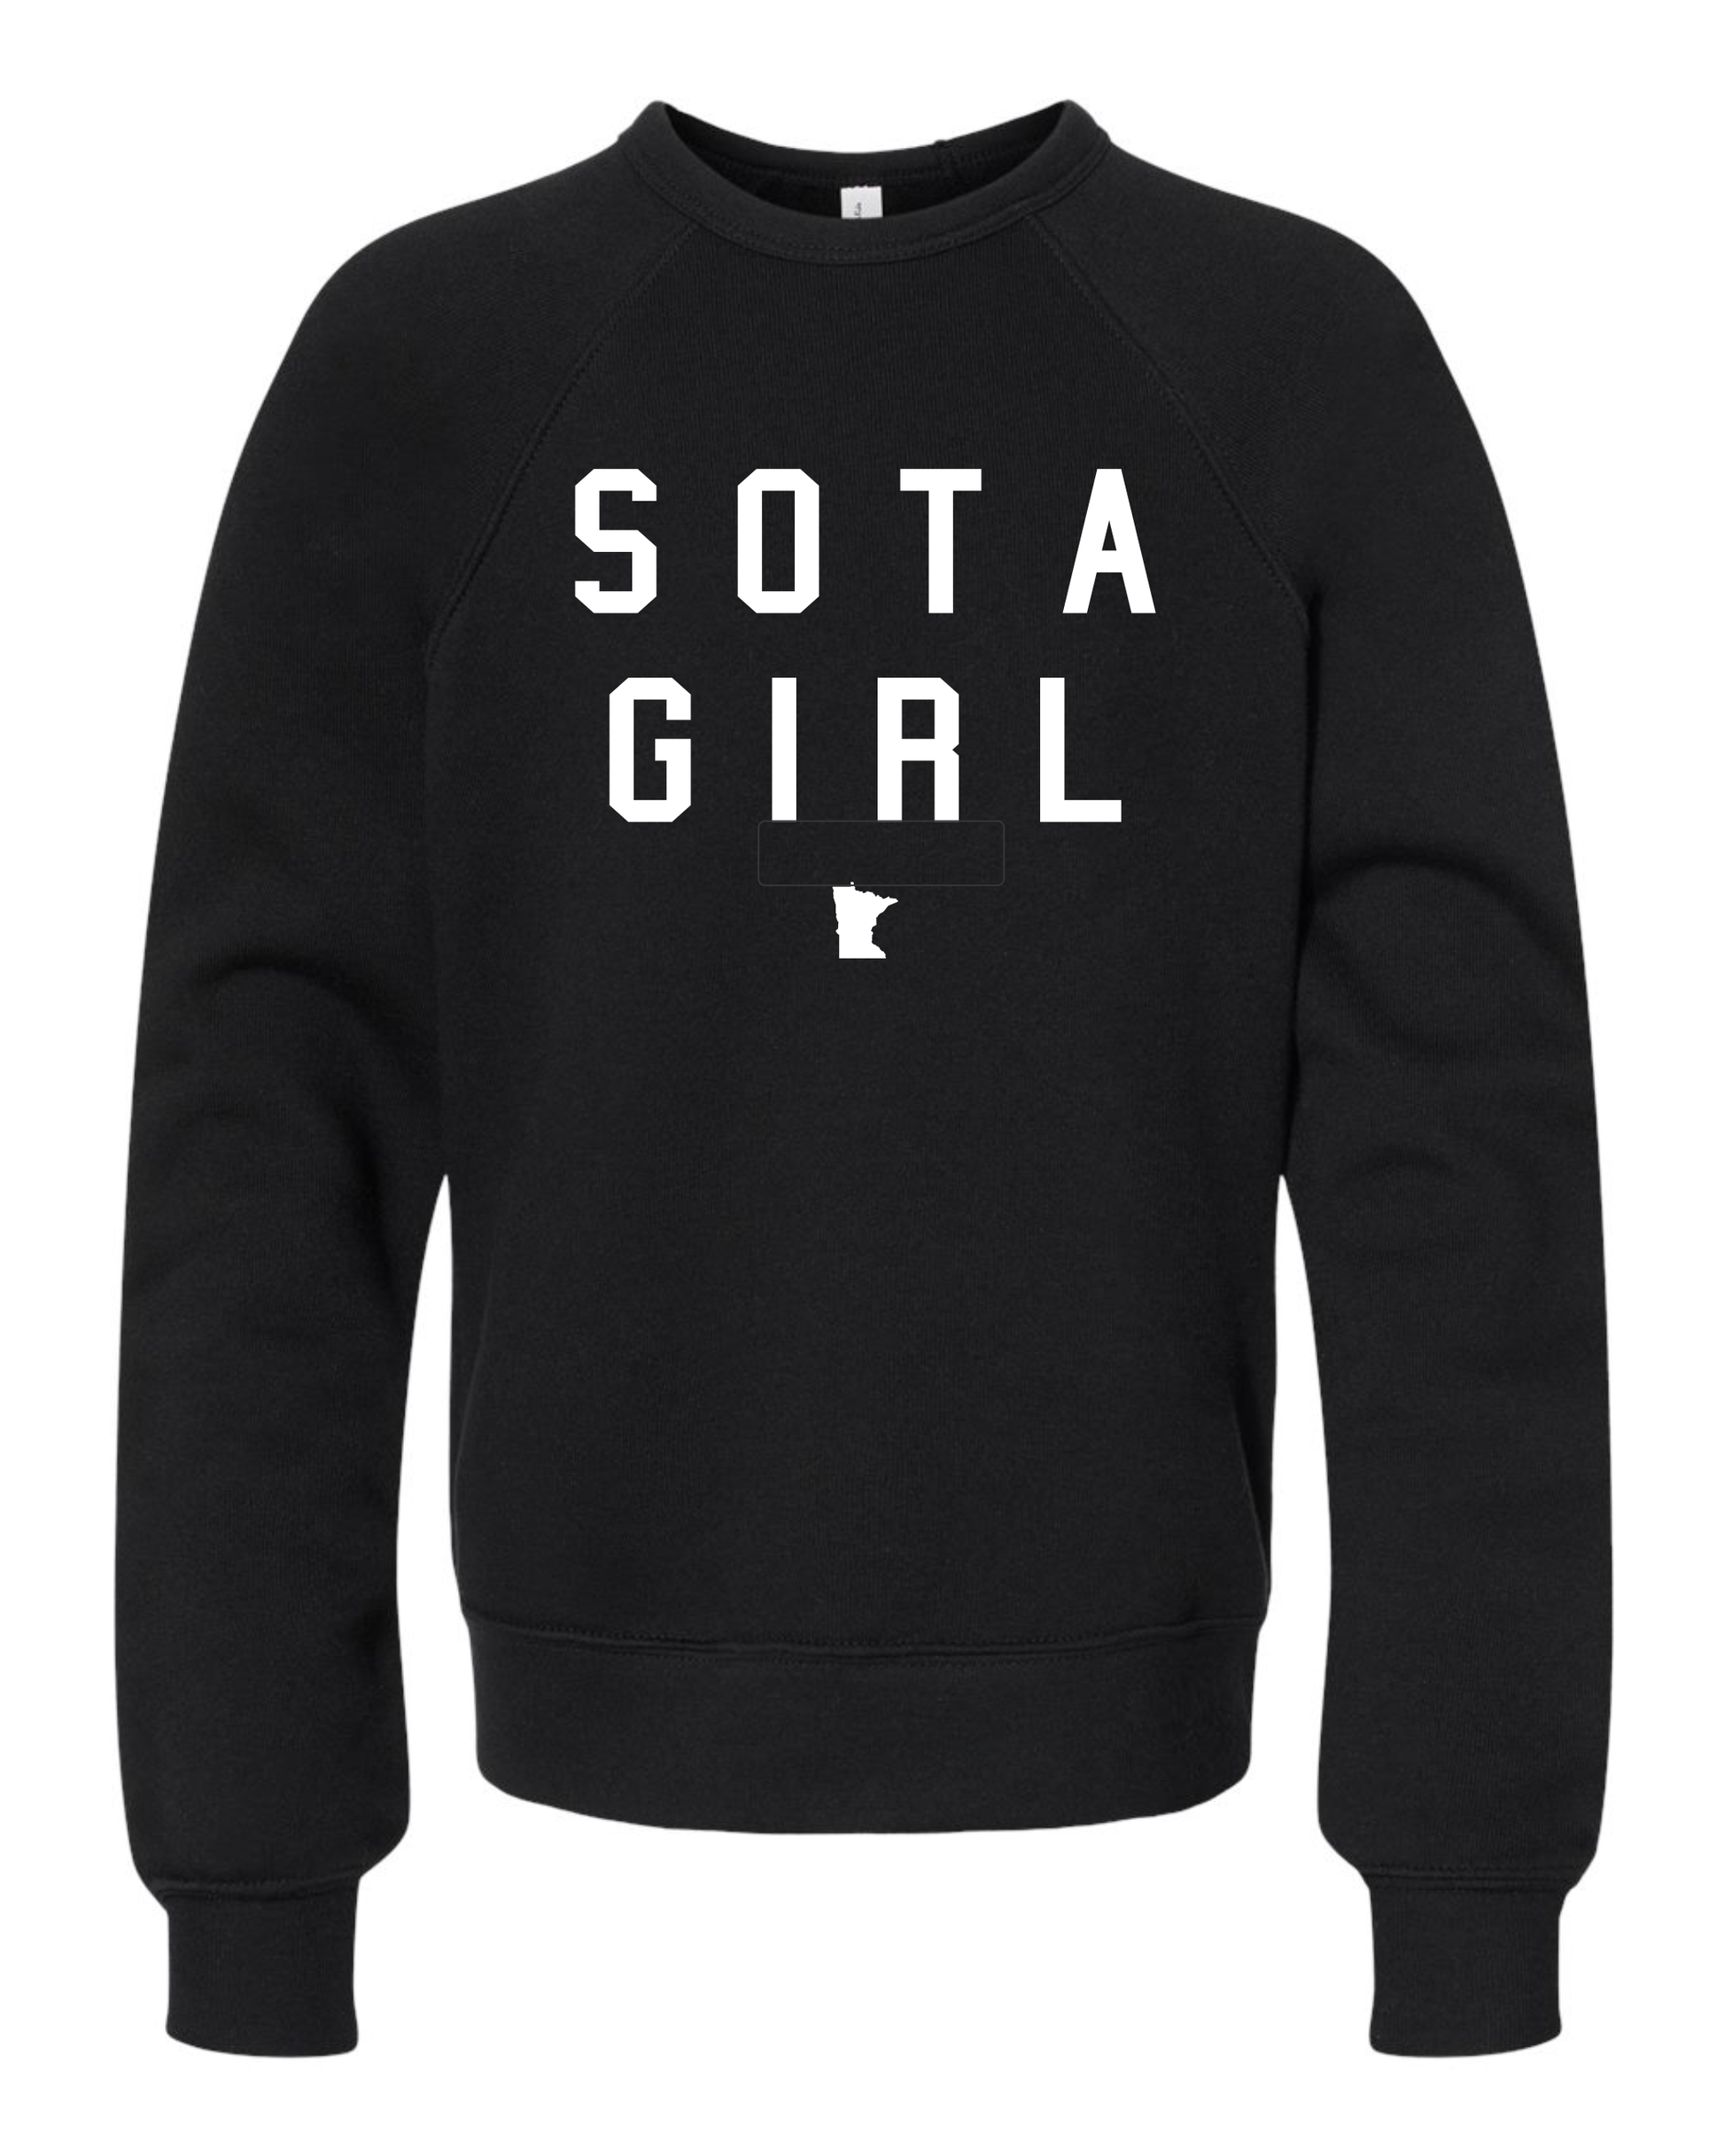 Sota Girl Youth Crew Girls